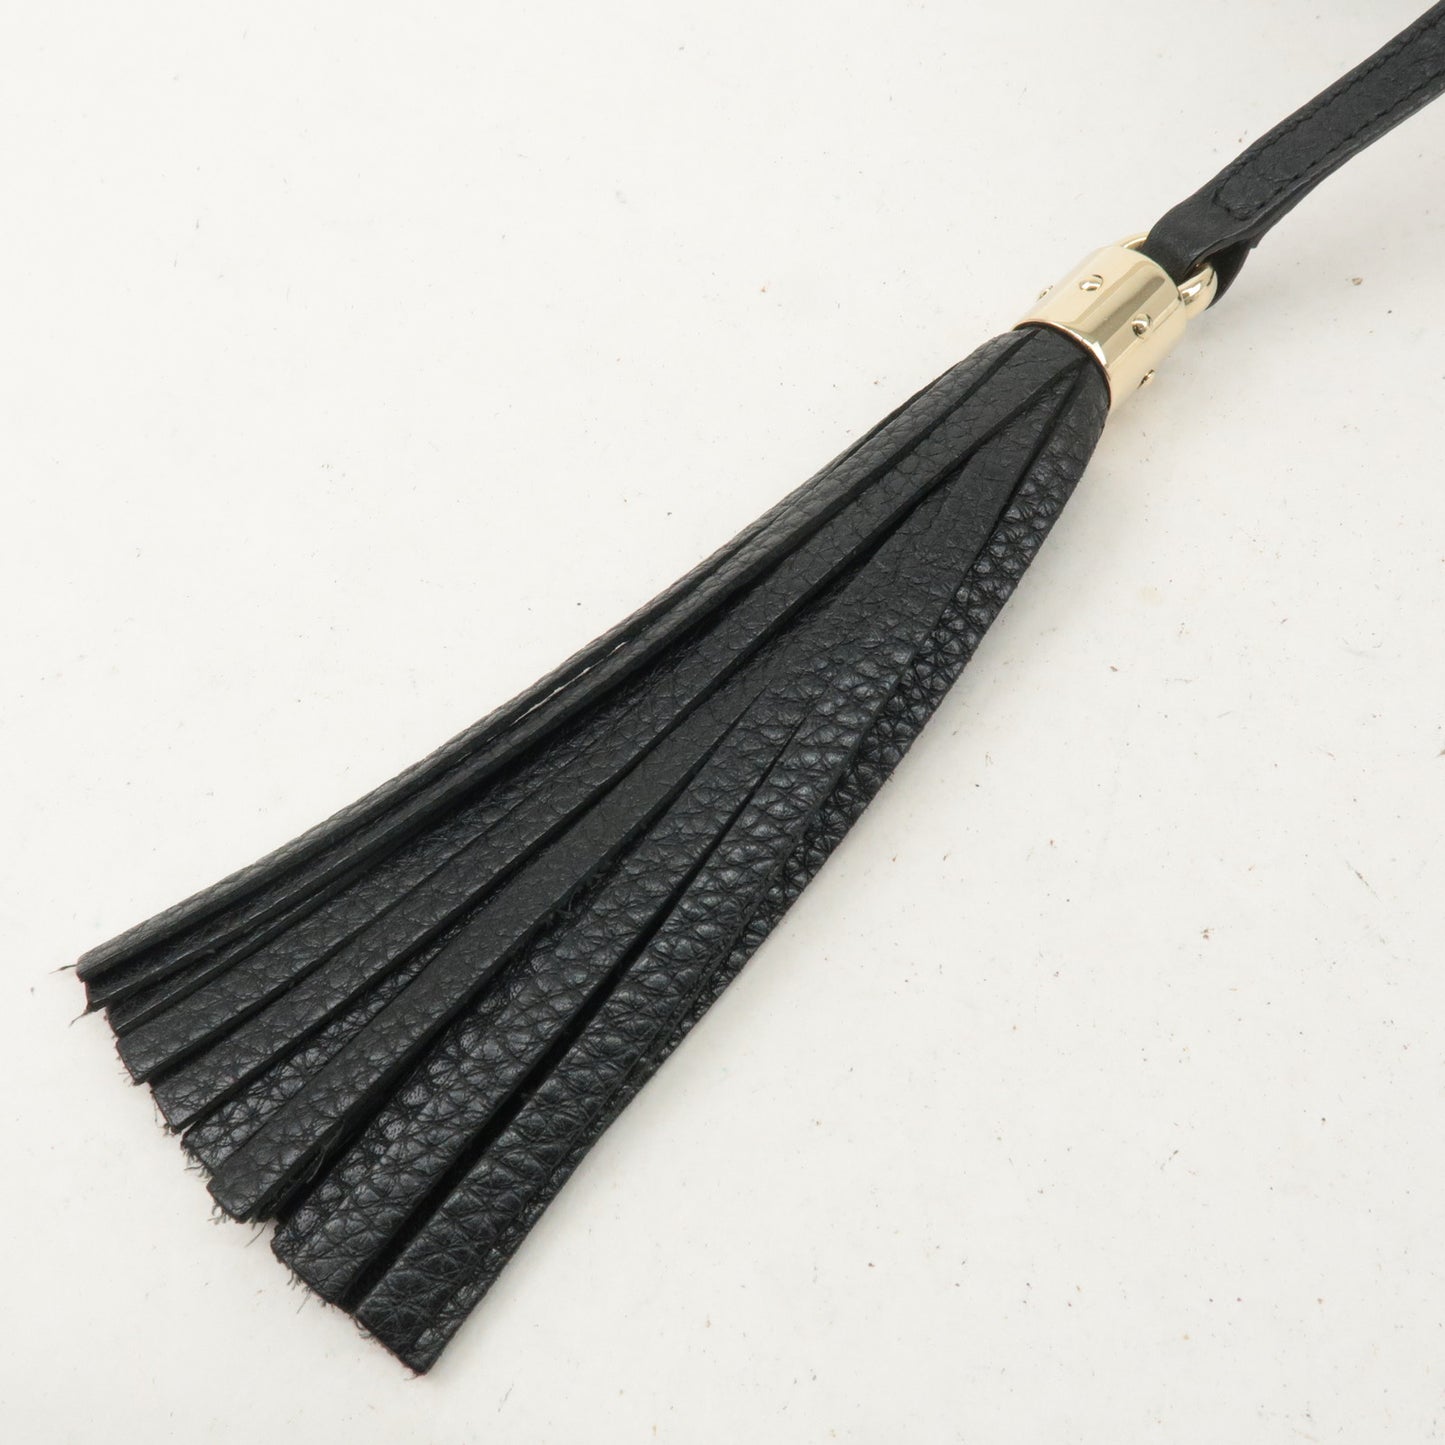 GUCCI SOHO Leather Chain Shoulder Bag Black 308982